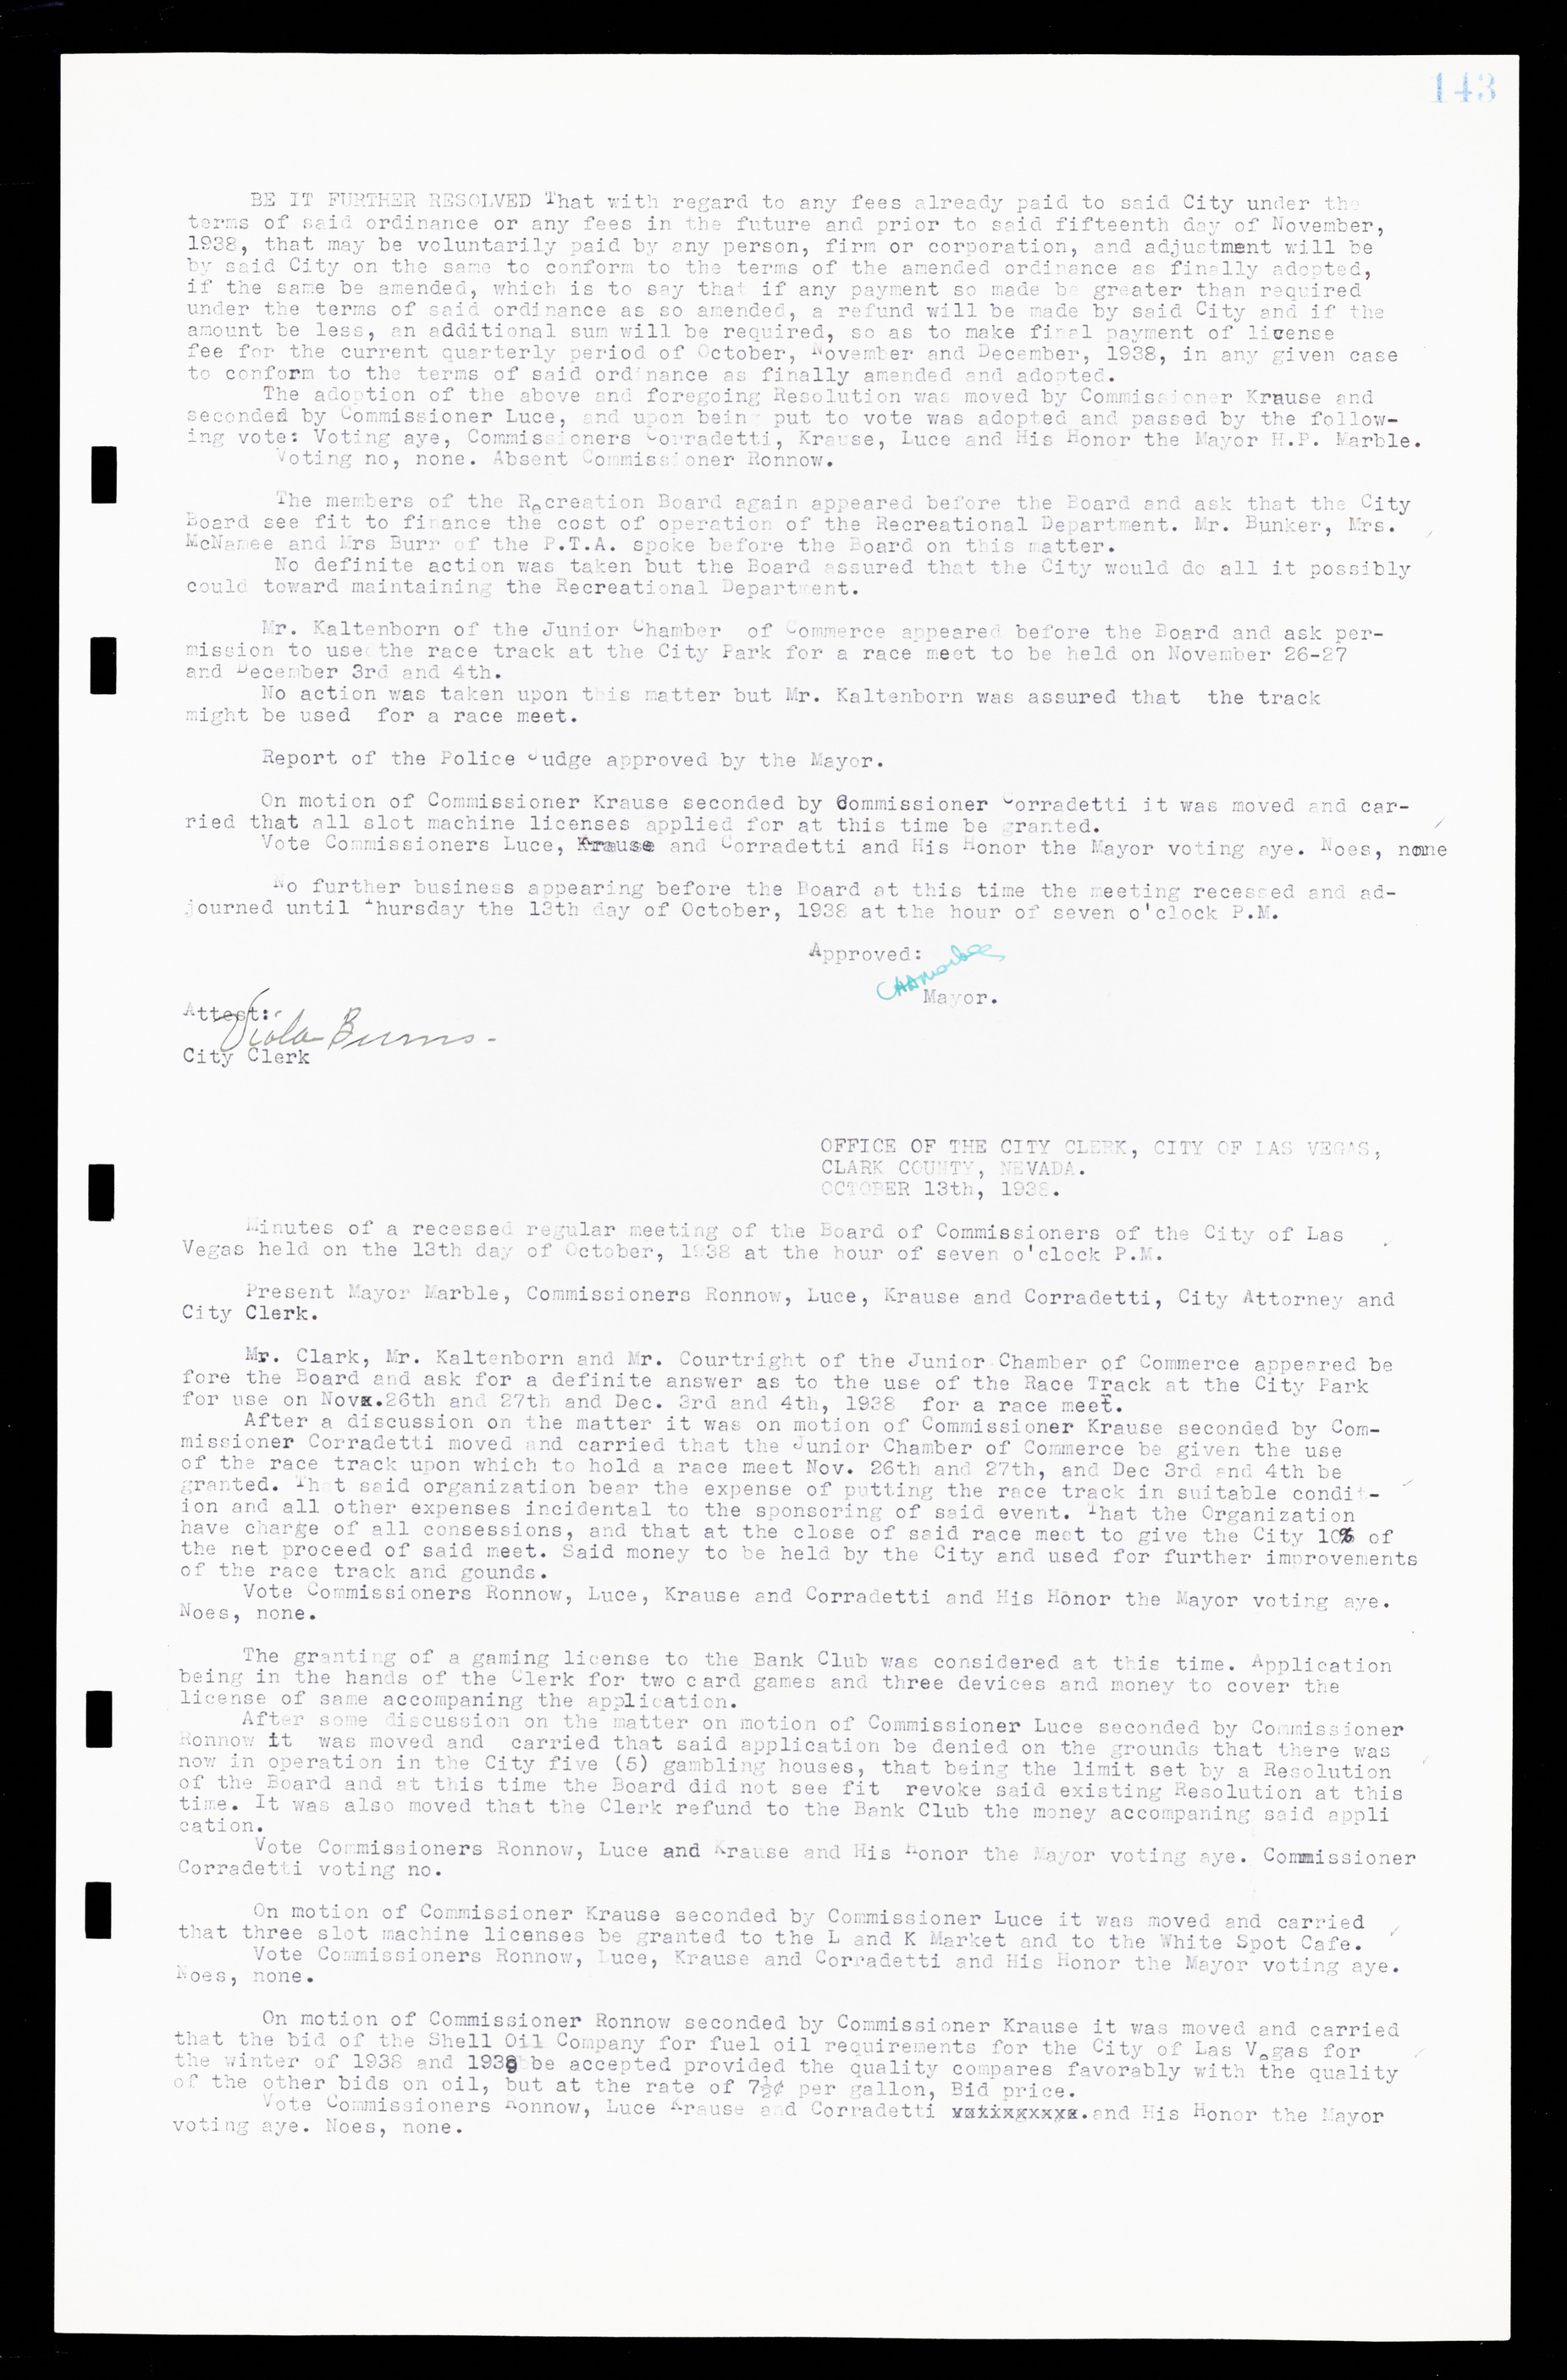 Las Vegas City Commission Minutes, February 17, 1937 to August 4, 1942, lvc000004-156